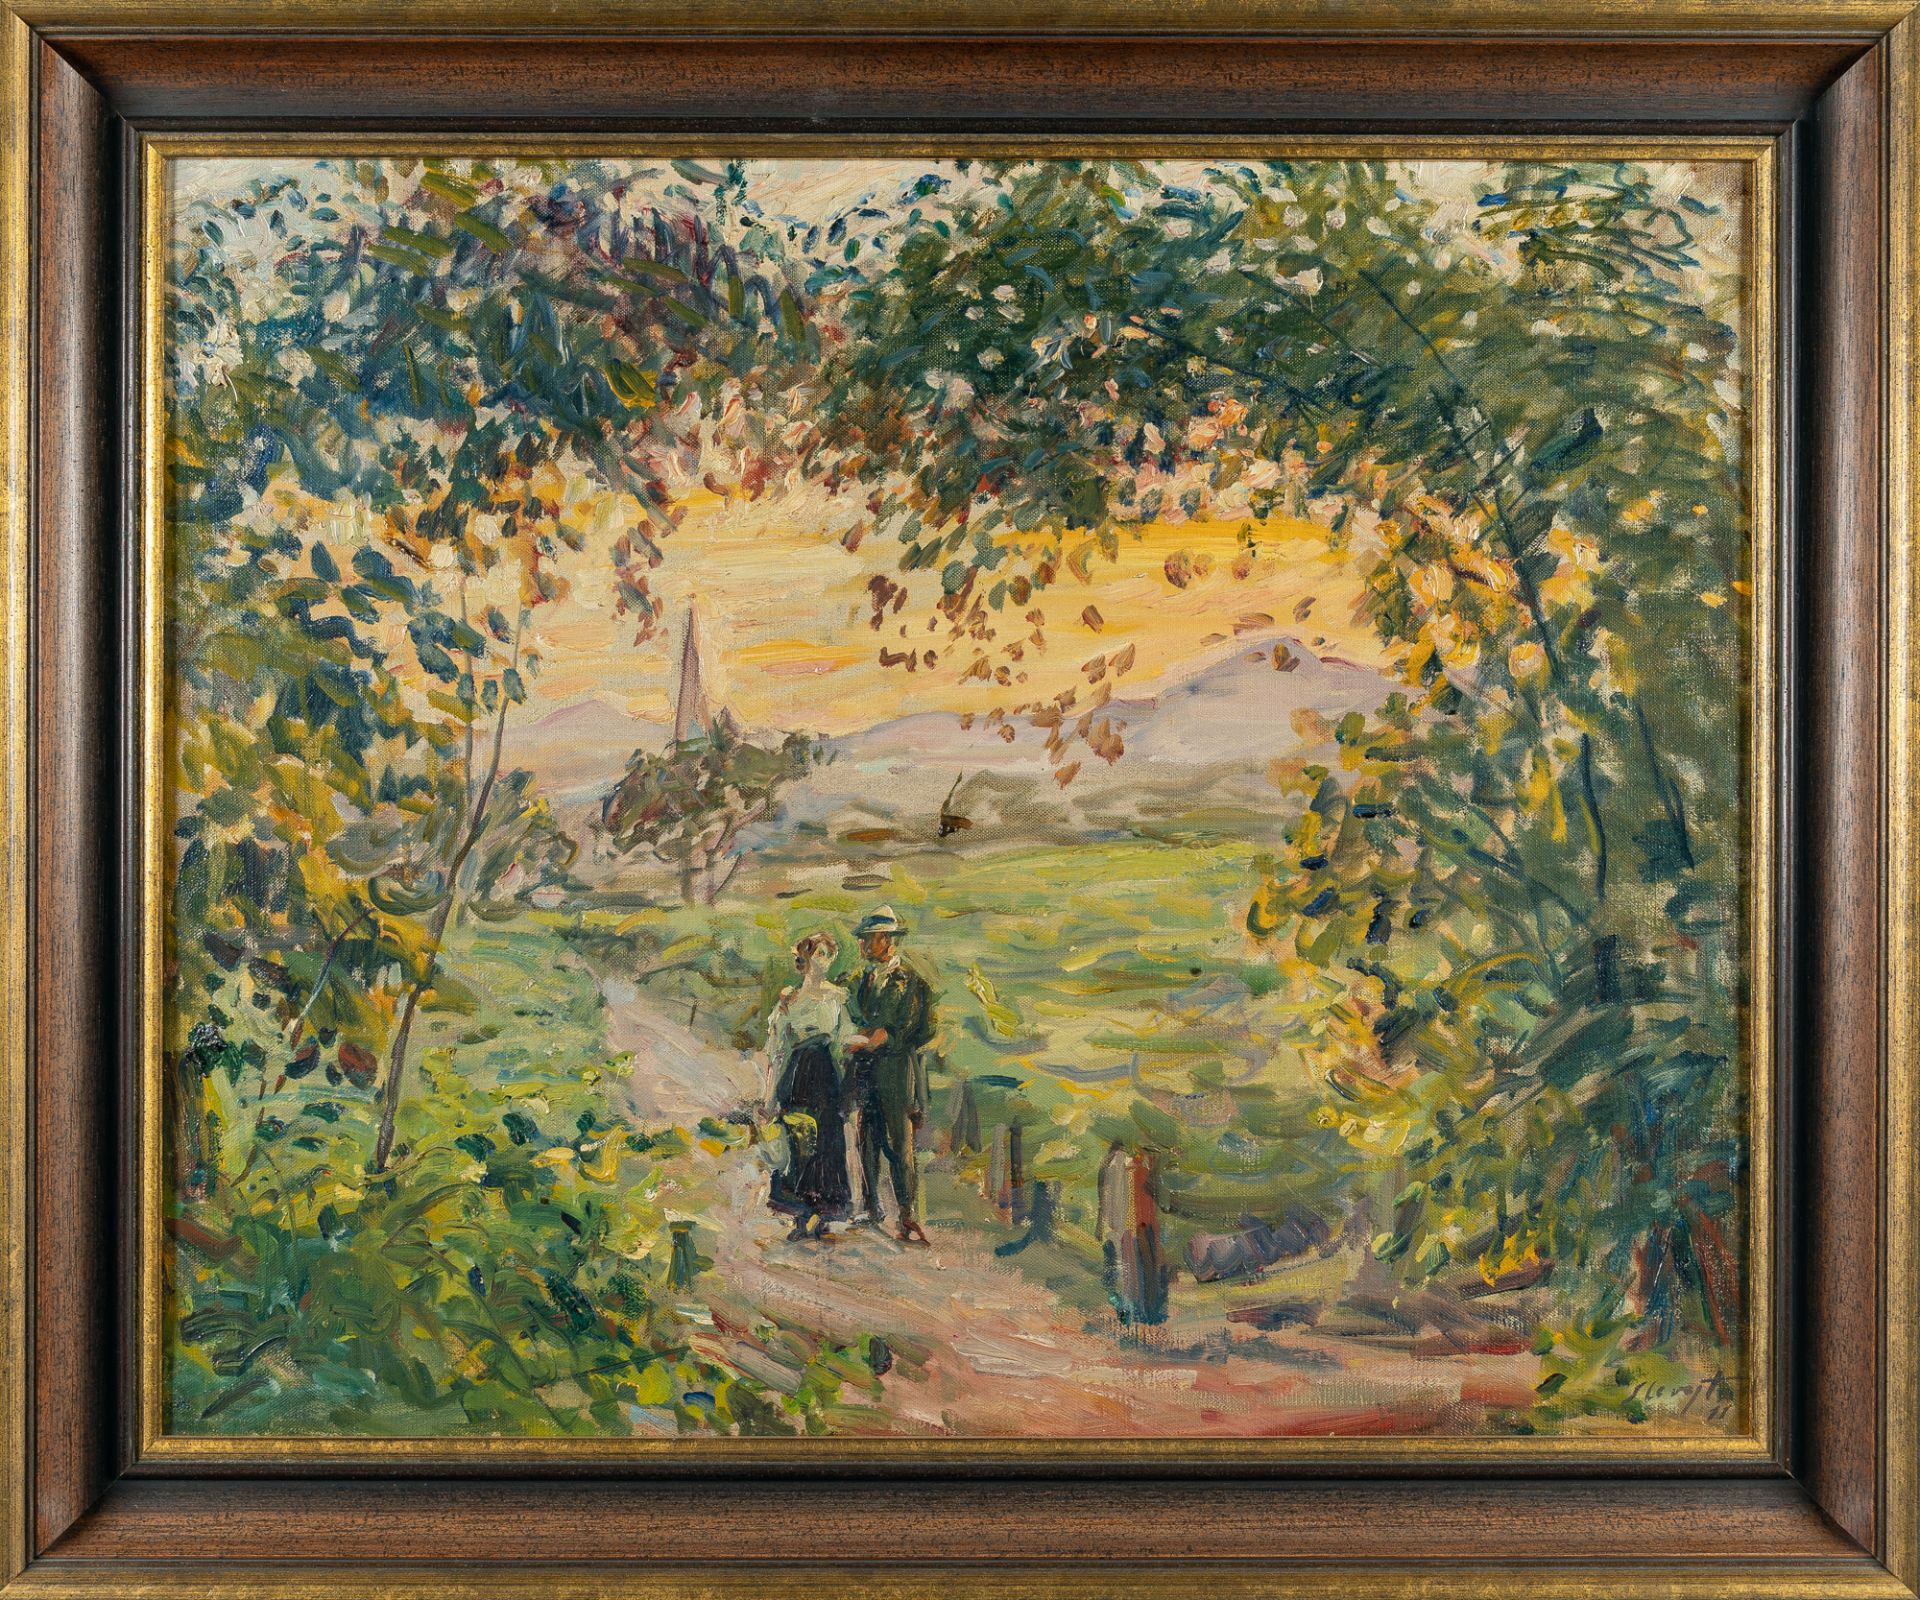 Max Slevogt (1868 Landshut - Neukastel/Pfalz 1932), The walk (Evening scene with a couple / View - Image 4 of 4